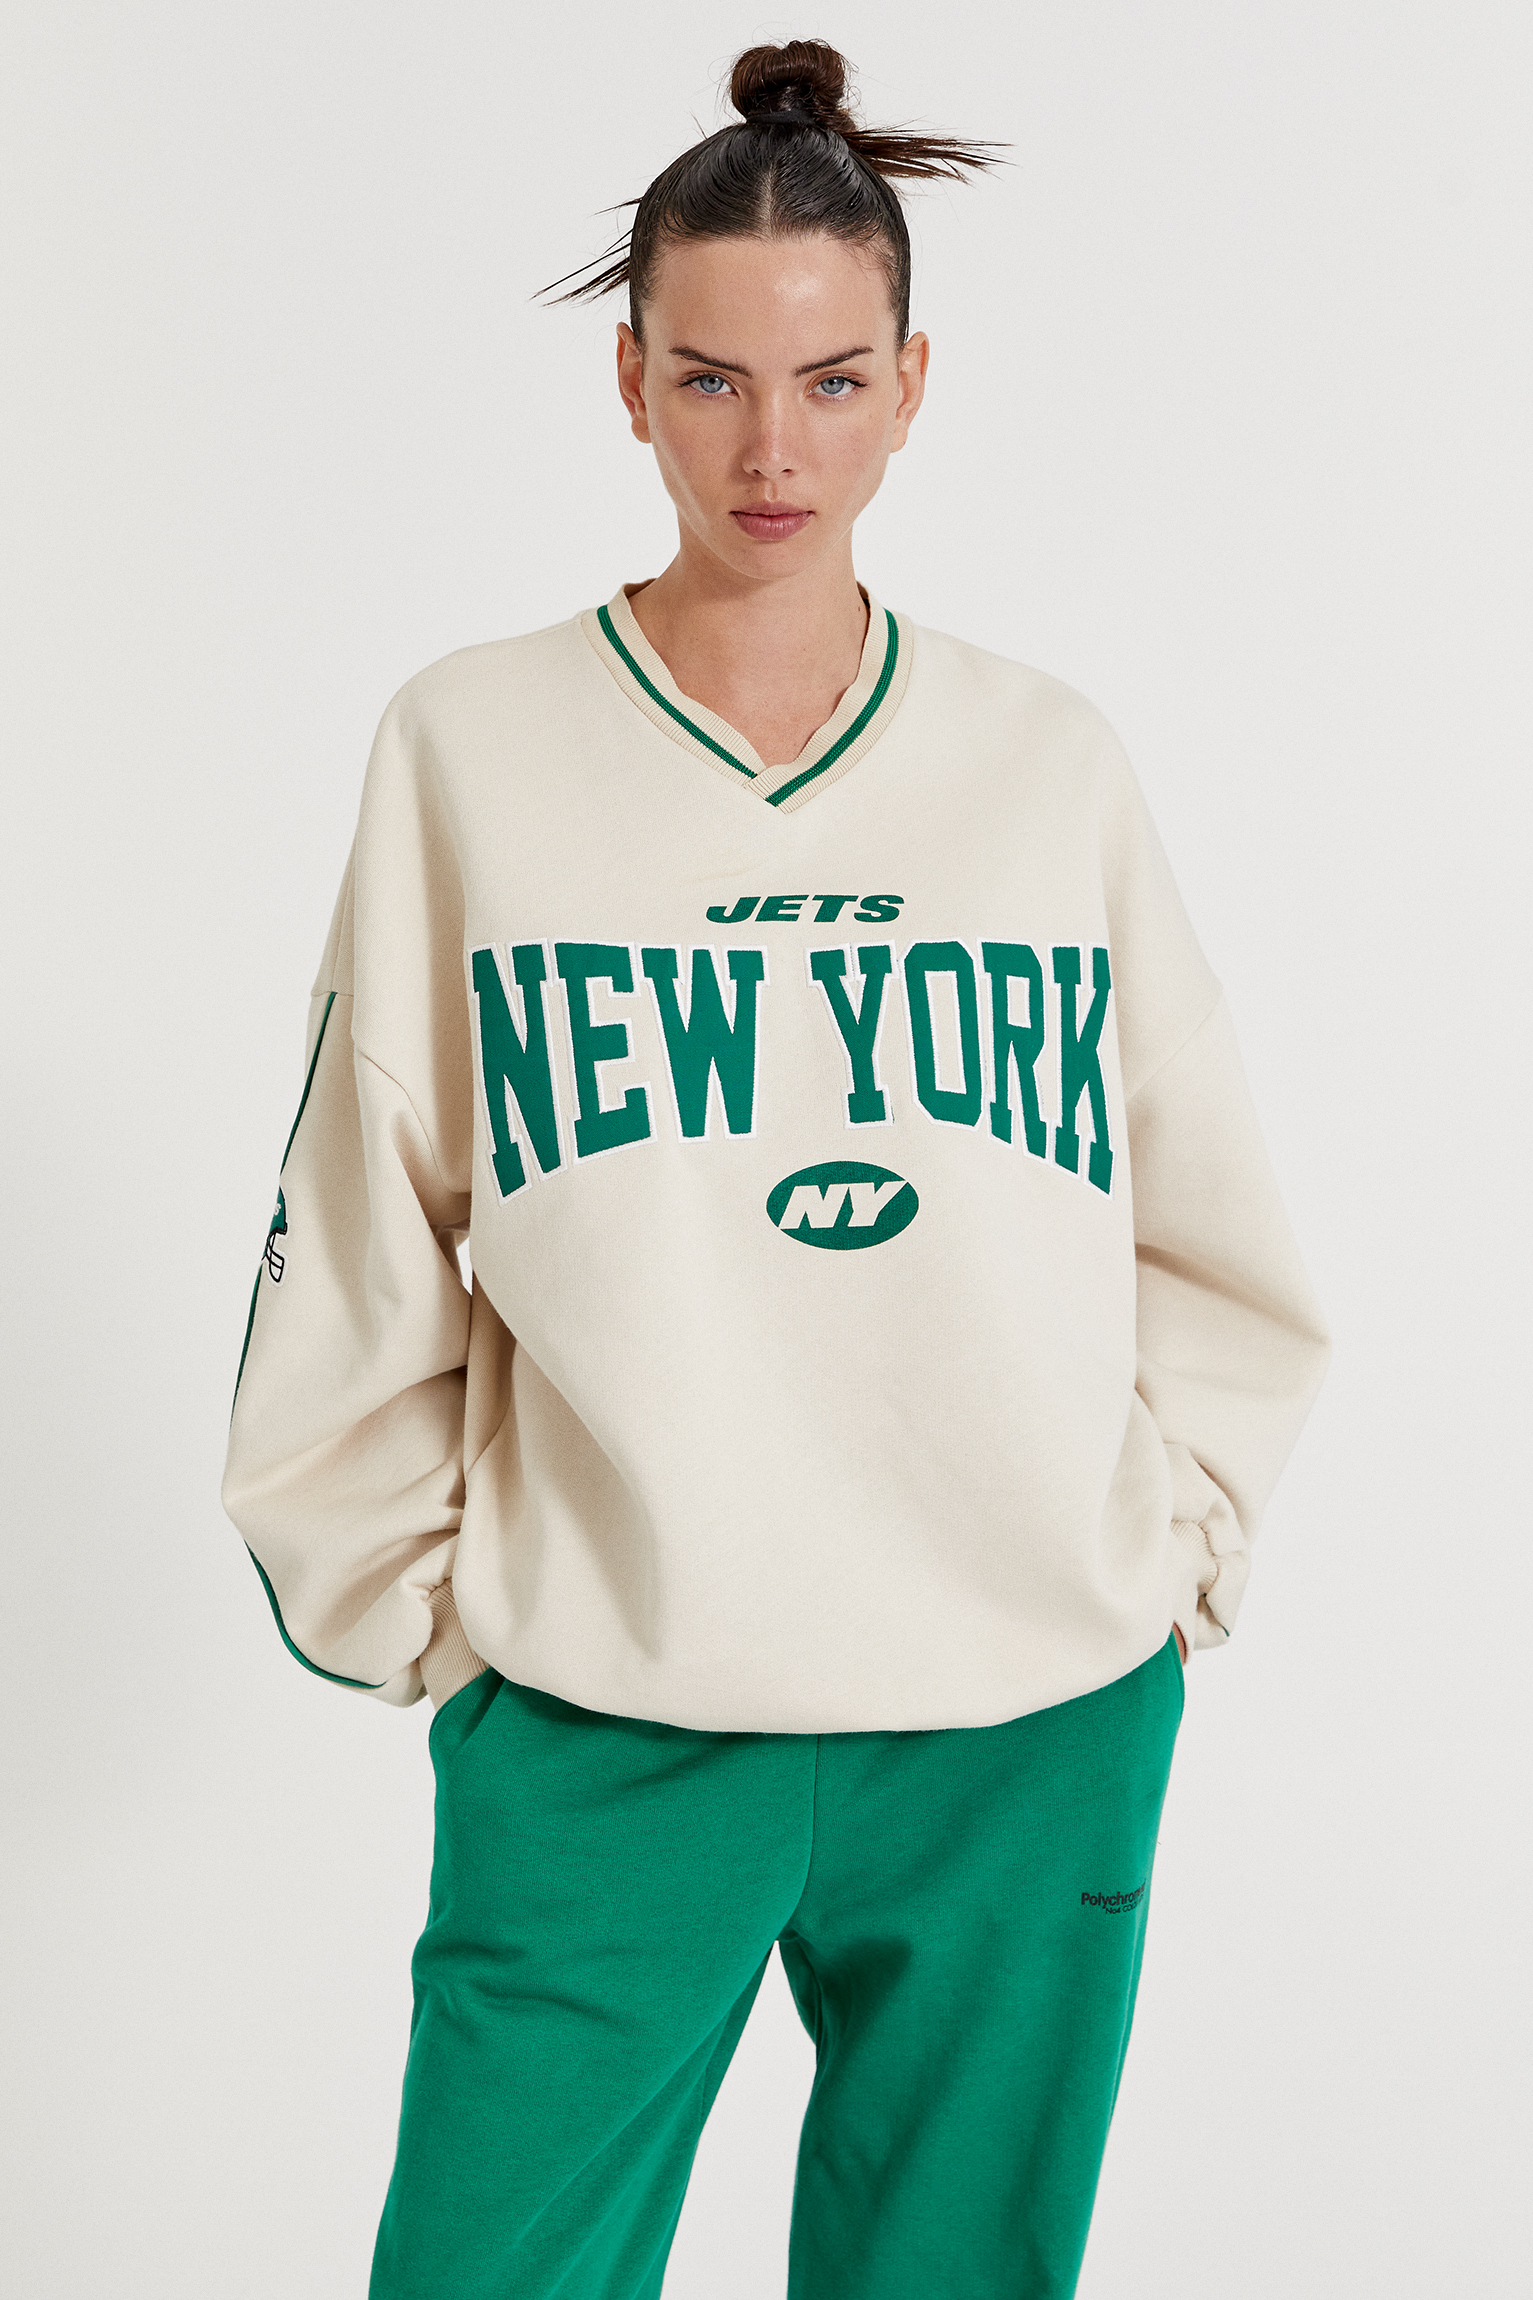 NFL New York Jets sweatshirt with V 